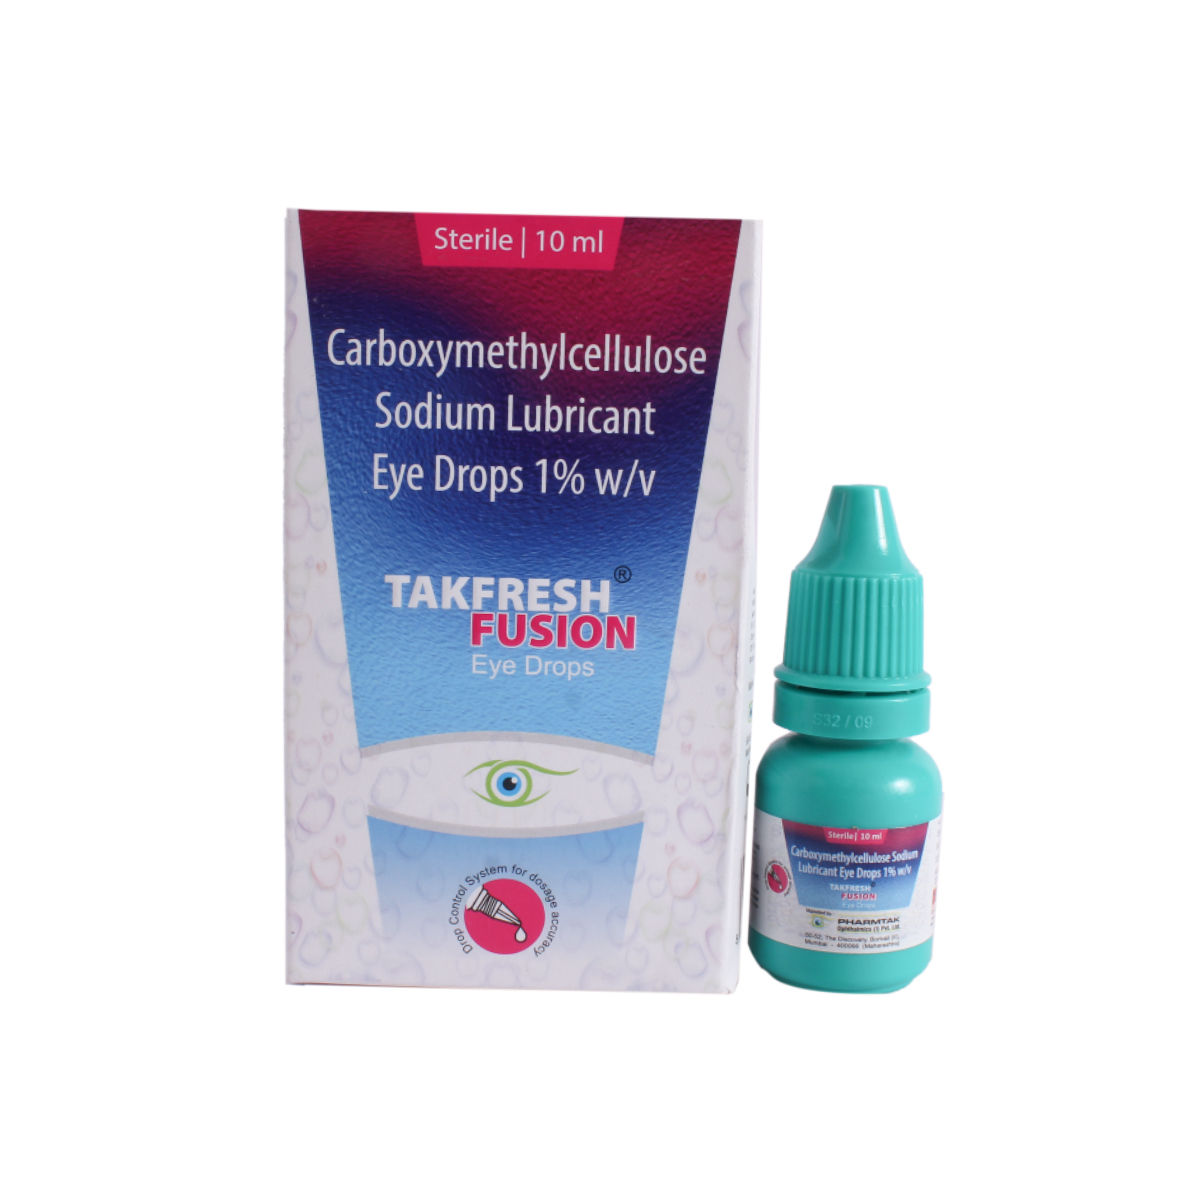 Takfresh Fusion 1%W/V Eye Drops 10ml, Pack of 1 Drops